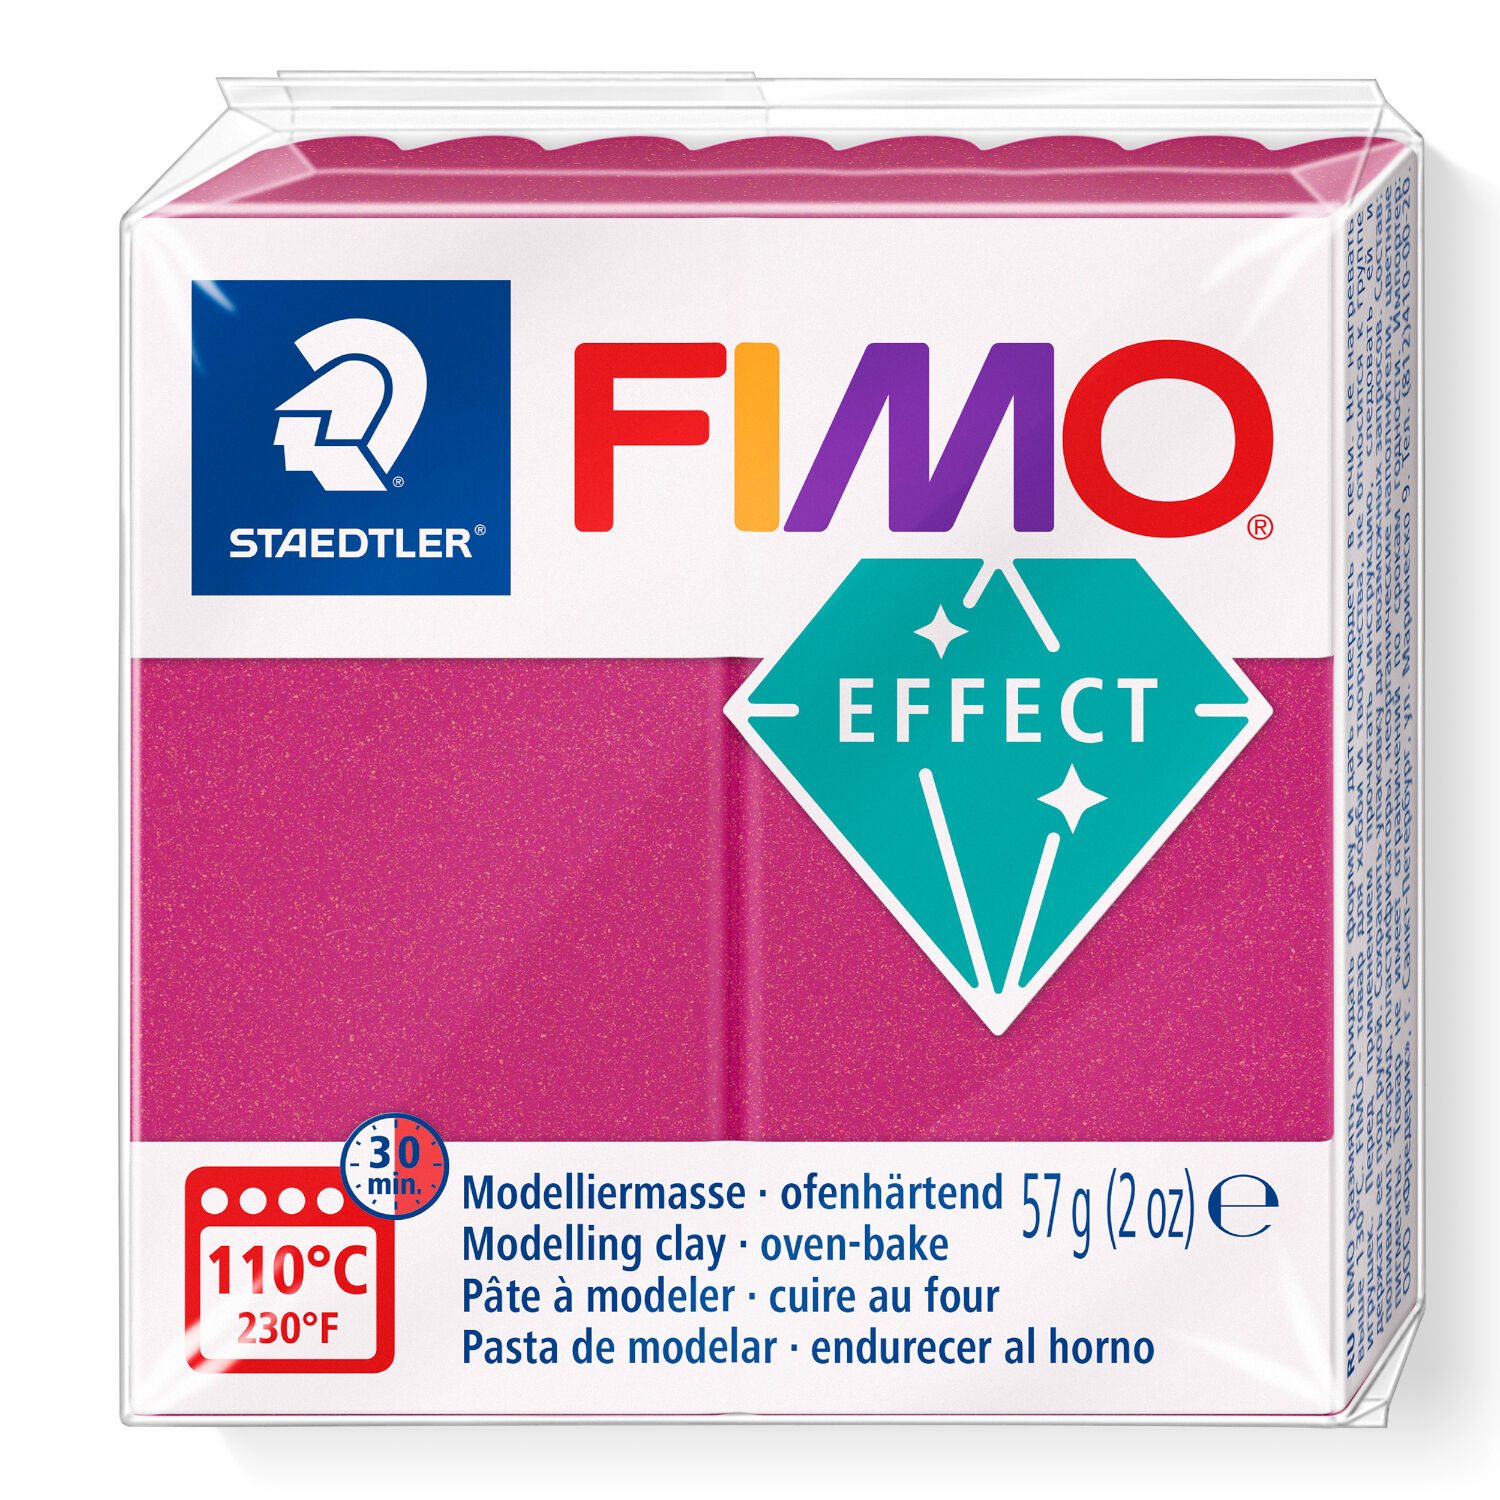 NEU Fimo Effect 57g, Metallic Bordeaux